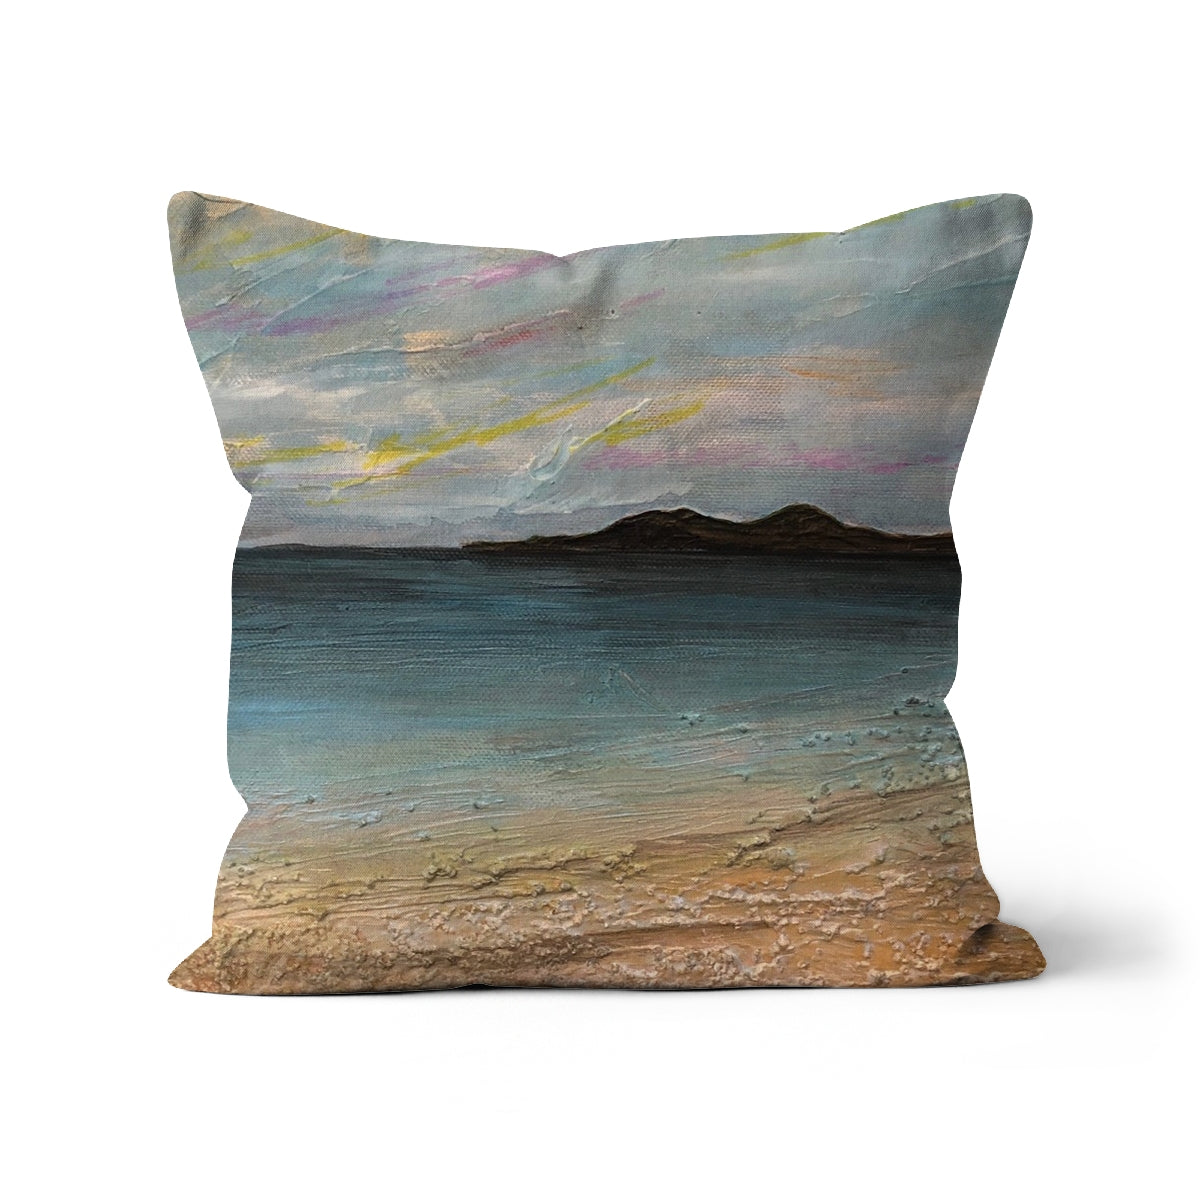 Garrynamonie Beach South Uist Art Gifts Cushion-Cushions-Hebridean Islands Art Gallery-Canvas-18"x18"-Paintings, Prints, Homeware, Art Gifts From Scotland By Scottish Artist Kevin Hunter